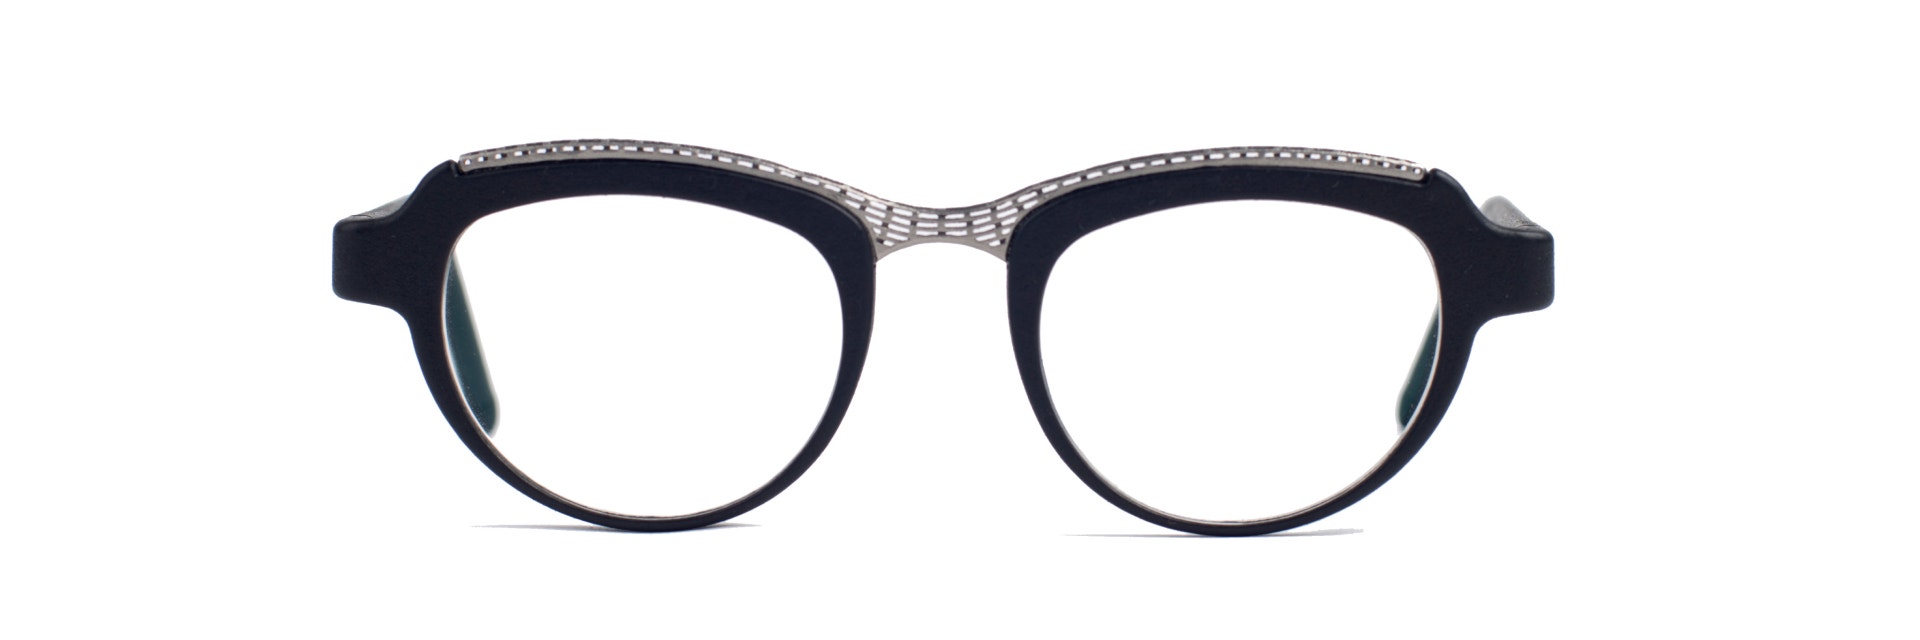 Black 3D-pritnted eyeglasses with a mesh design component